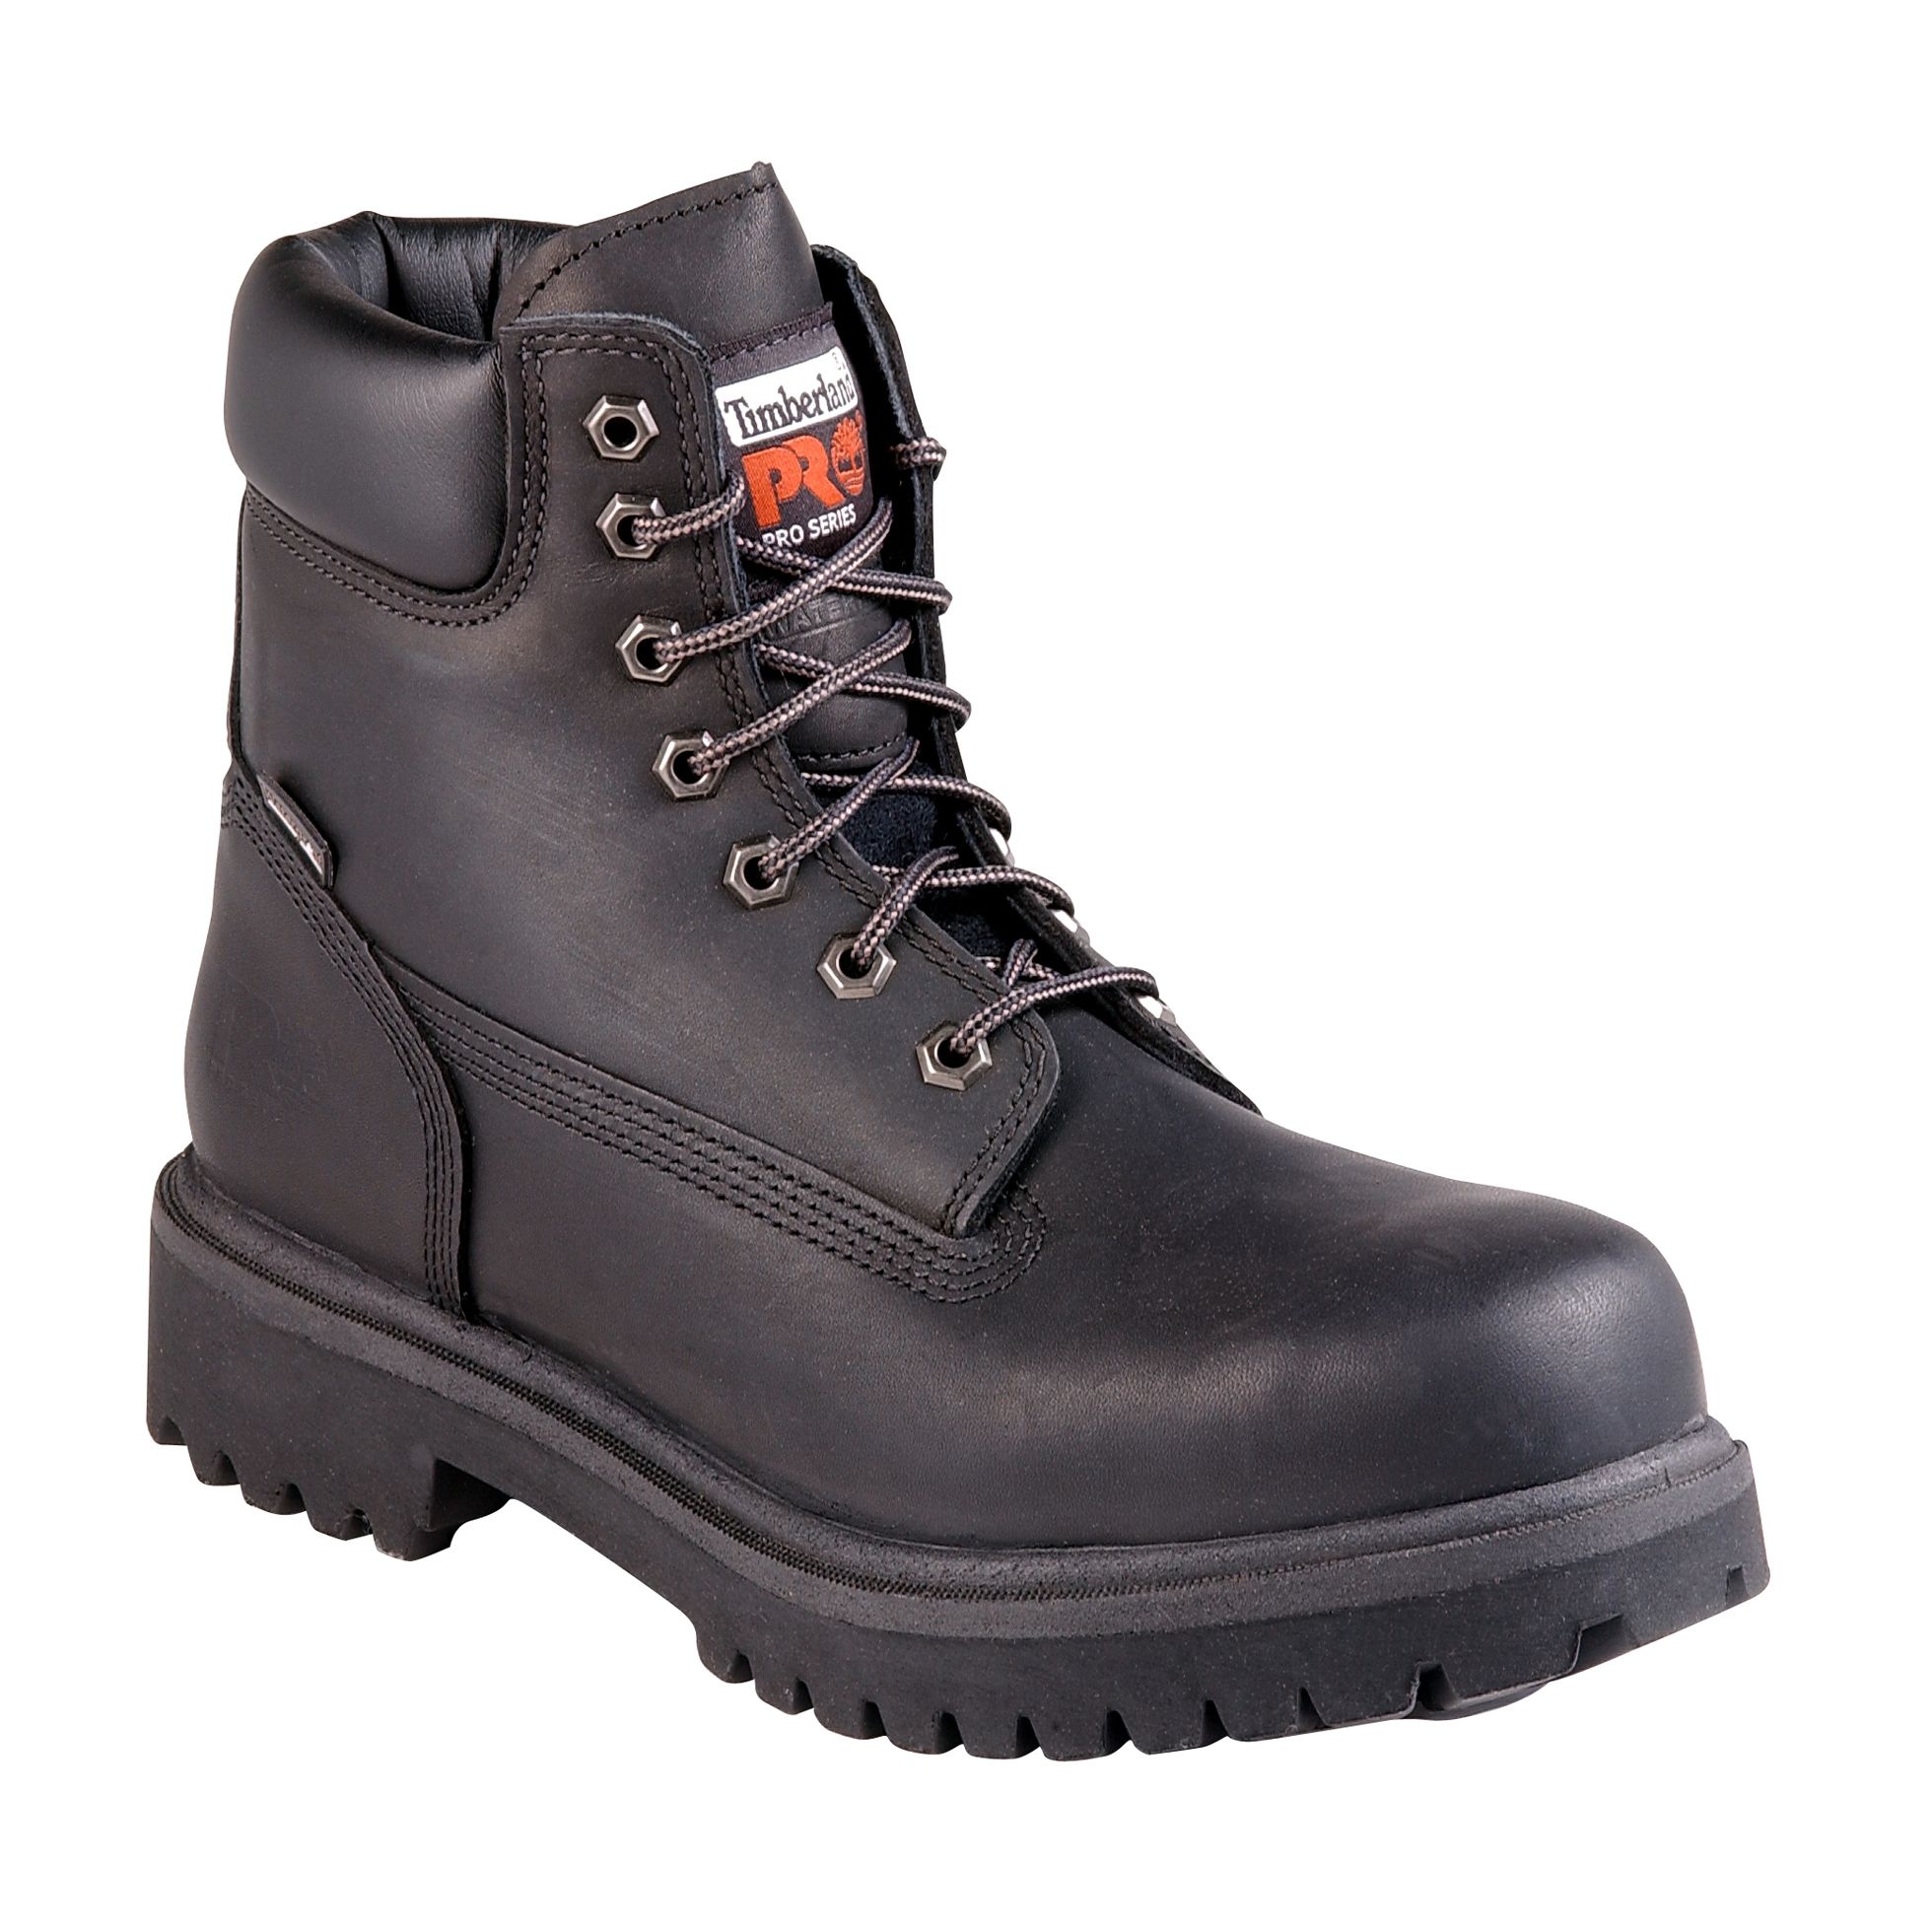 Timberland PRO Men's Work Boot Waterproof Leather Soft Toe 6